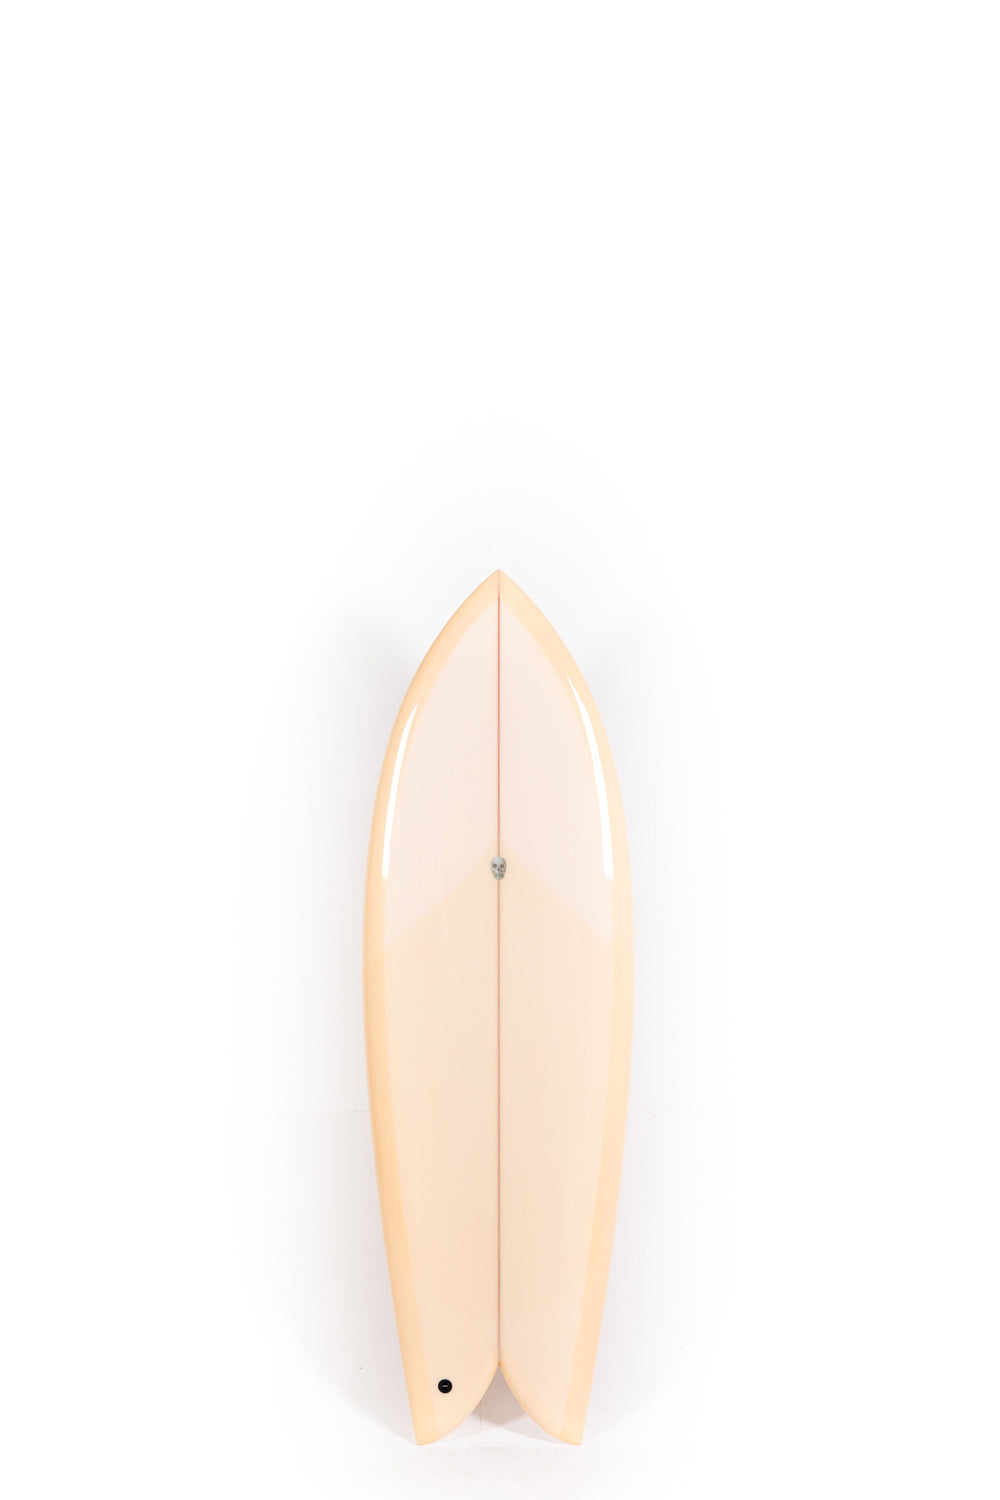 Pukas Surf Shop - Christenson Surfboards - CHRIS FISH - 5'6